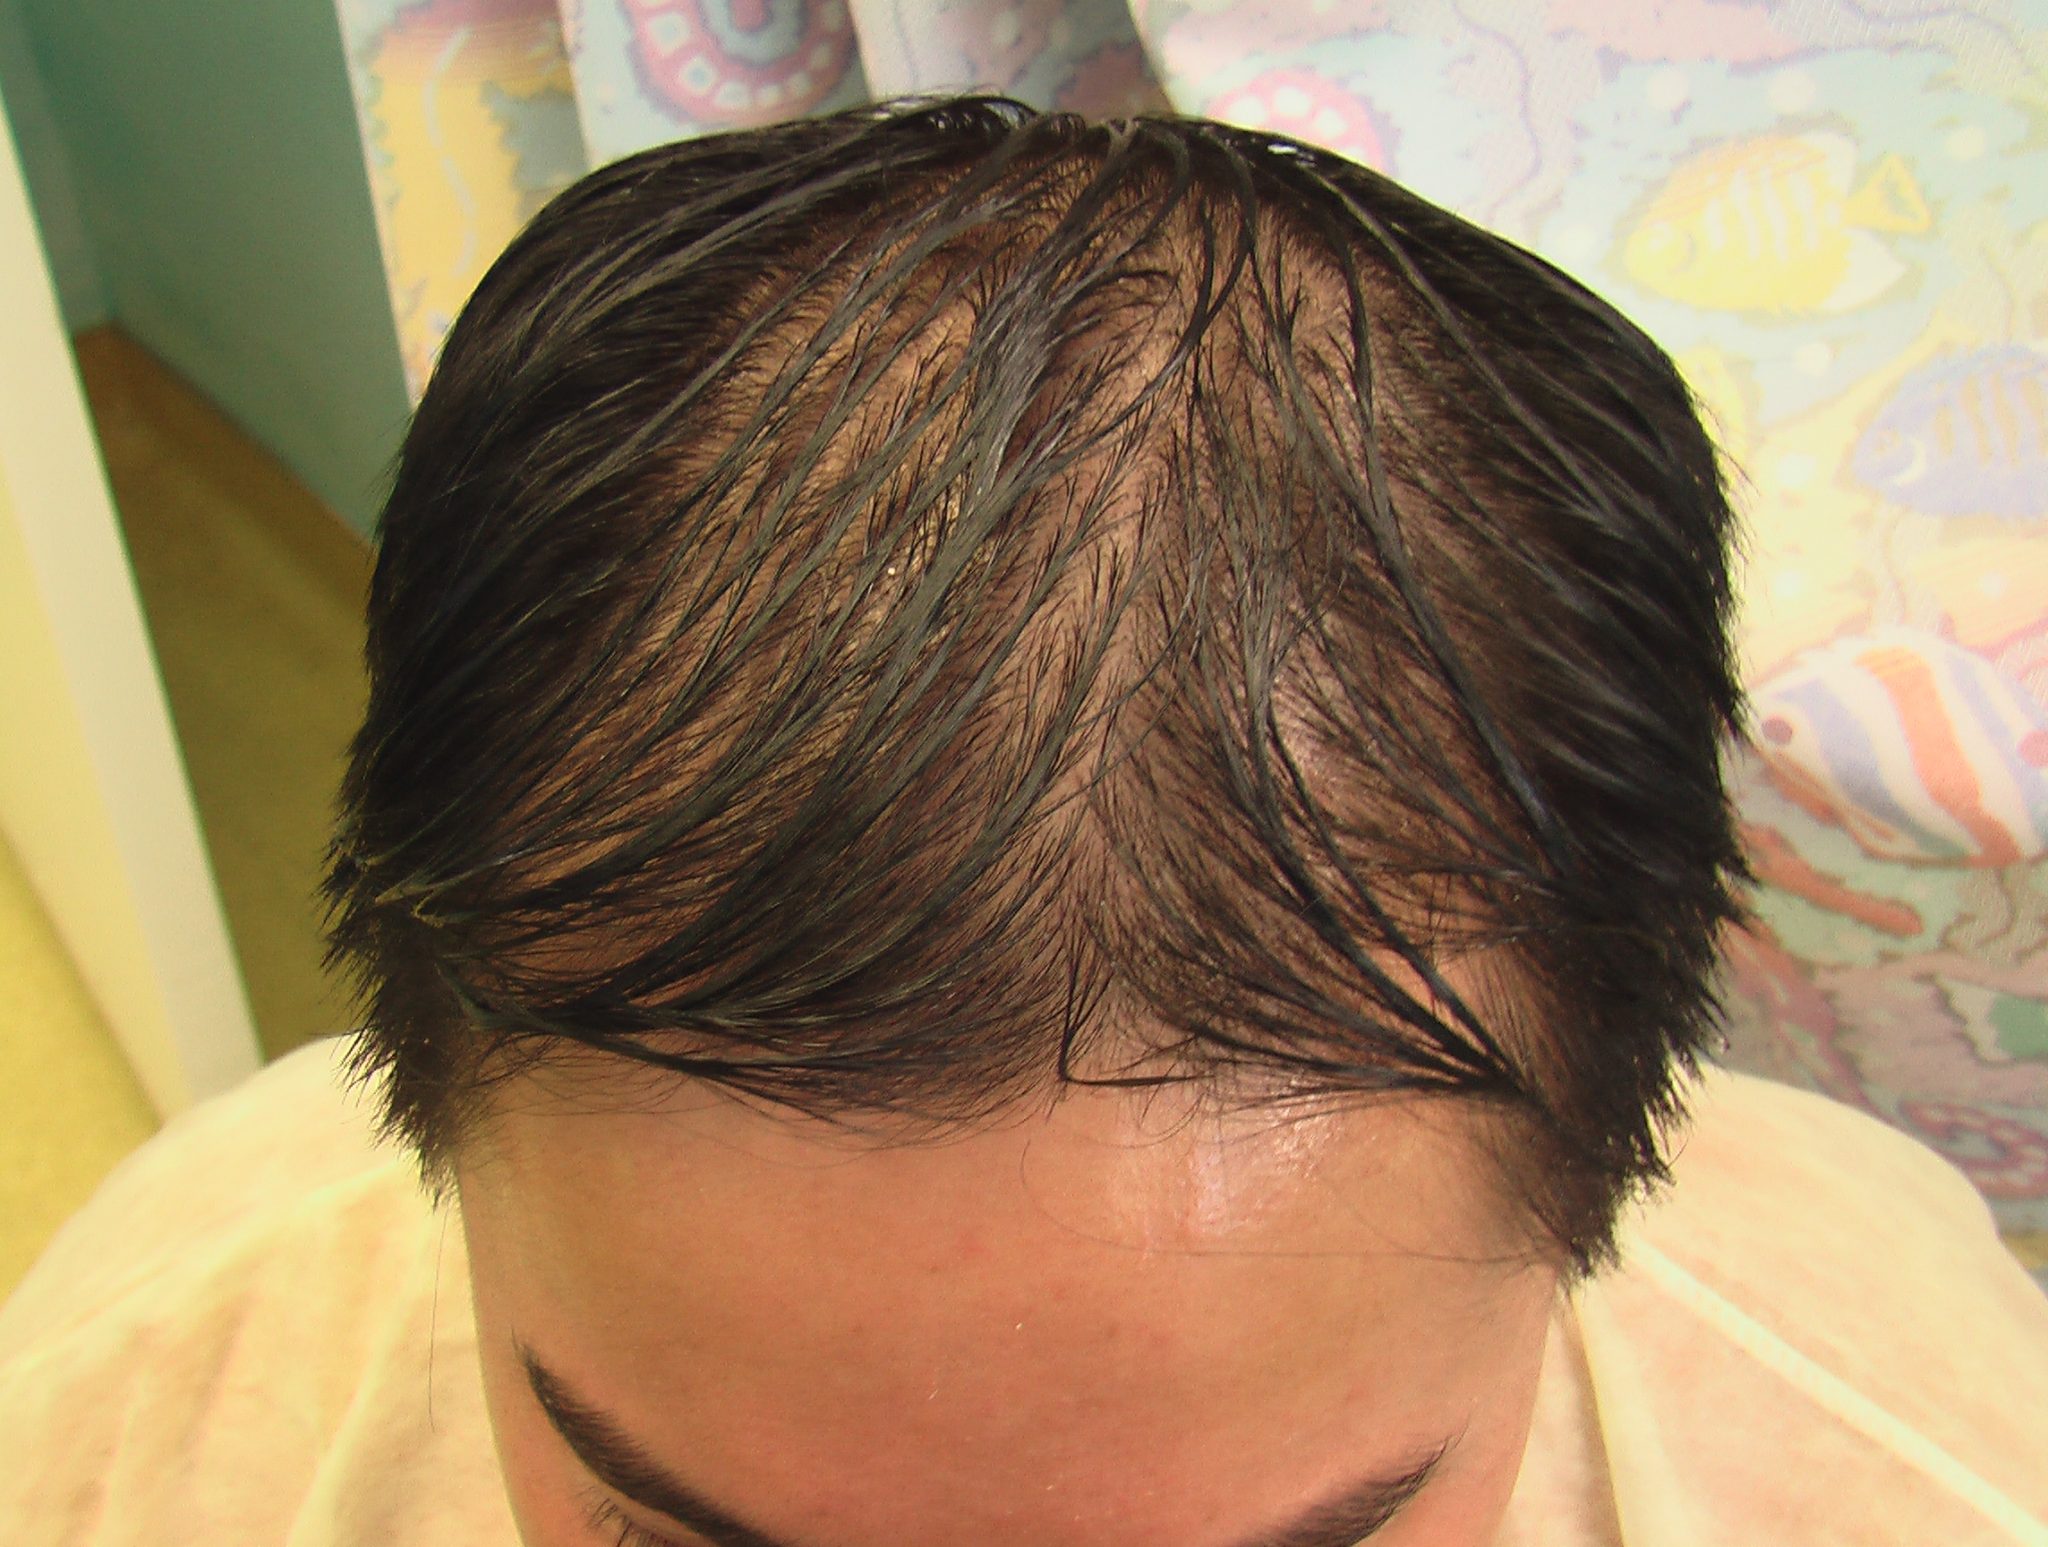  Strip Surgery vs FUE. Asian FUE hair transplant